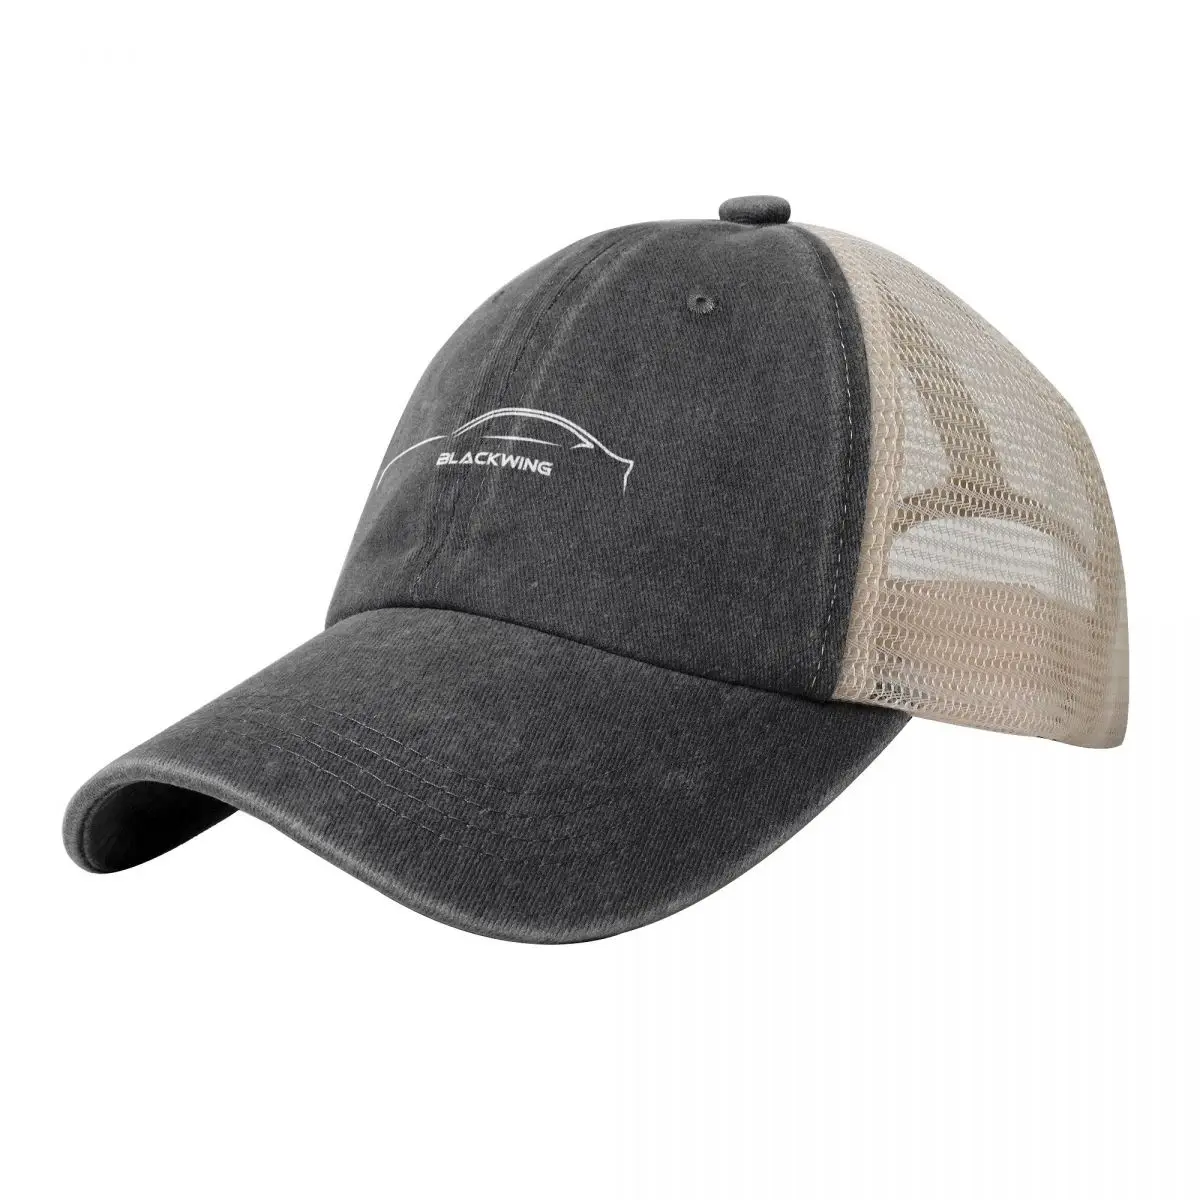 

CT5 Blackwing Outline Cowboy Mesh Baseball Cap Bobble Hat Beach Bag Sunscreen Brand Man cap For Man Women's